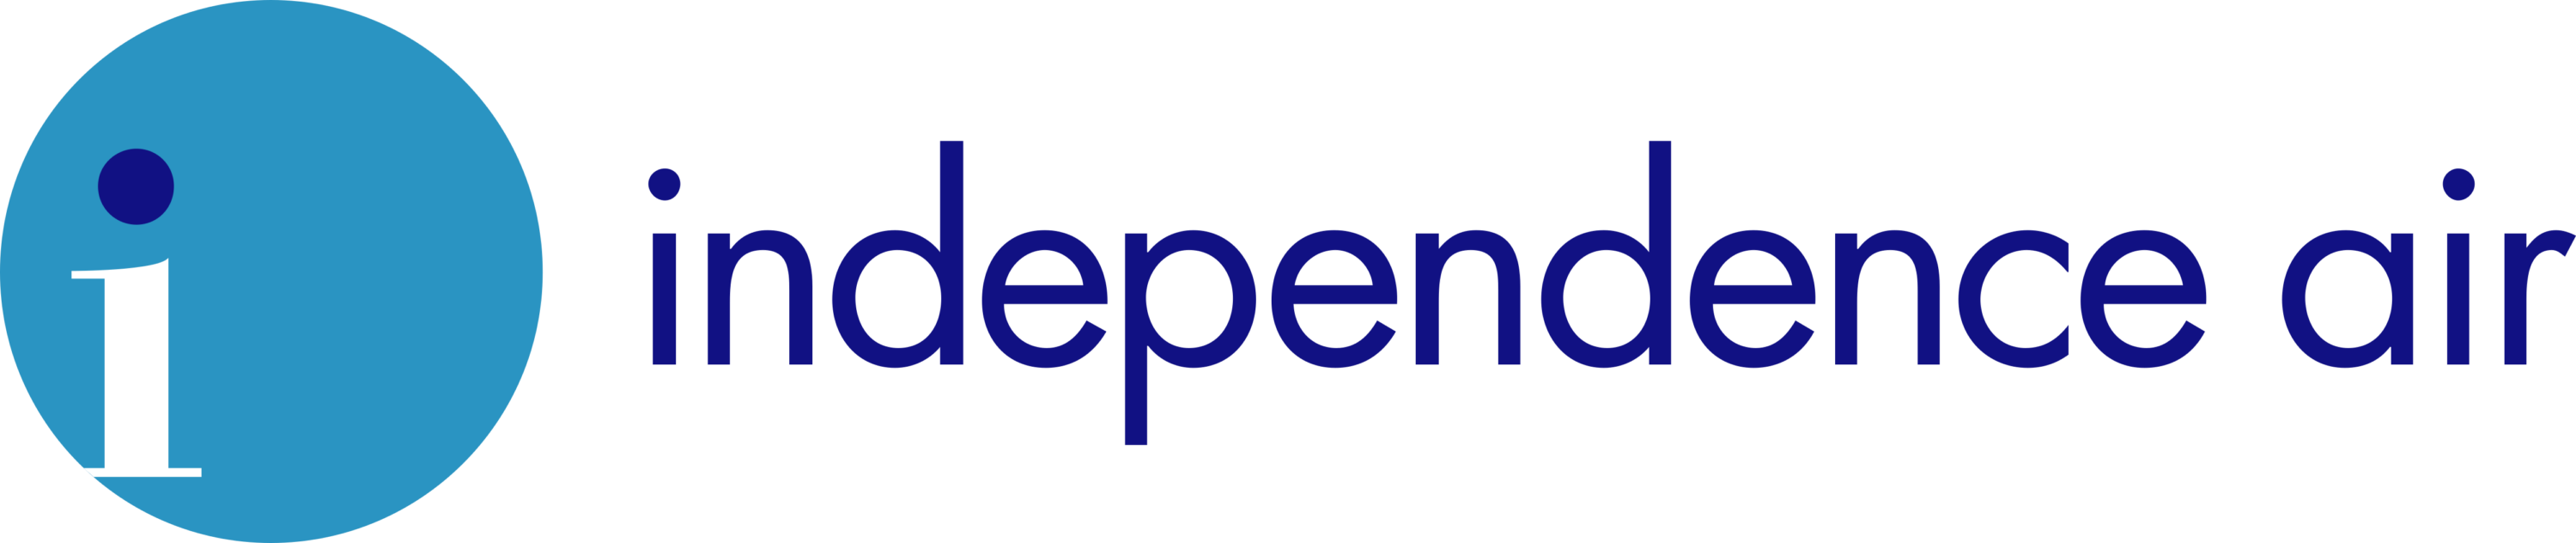 Independence Air Logo